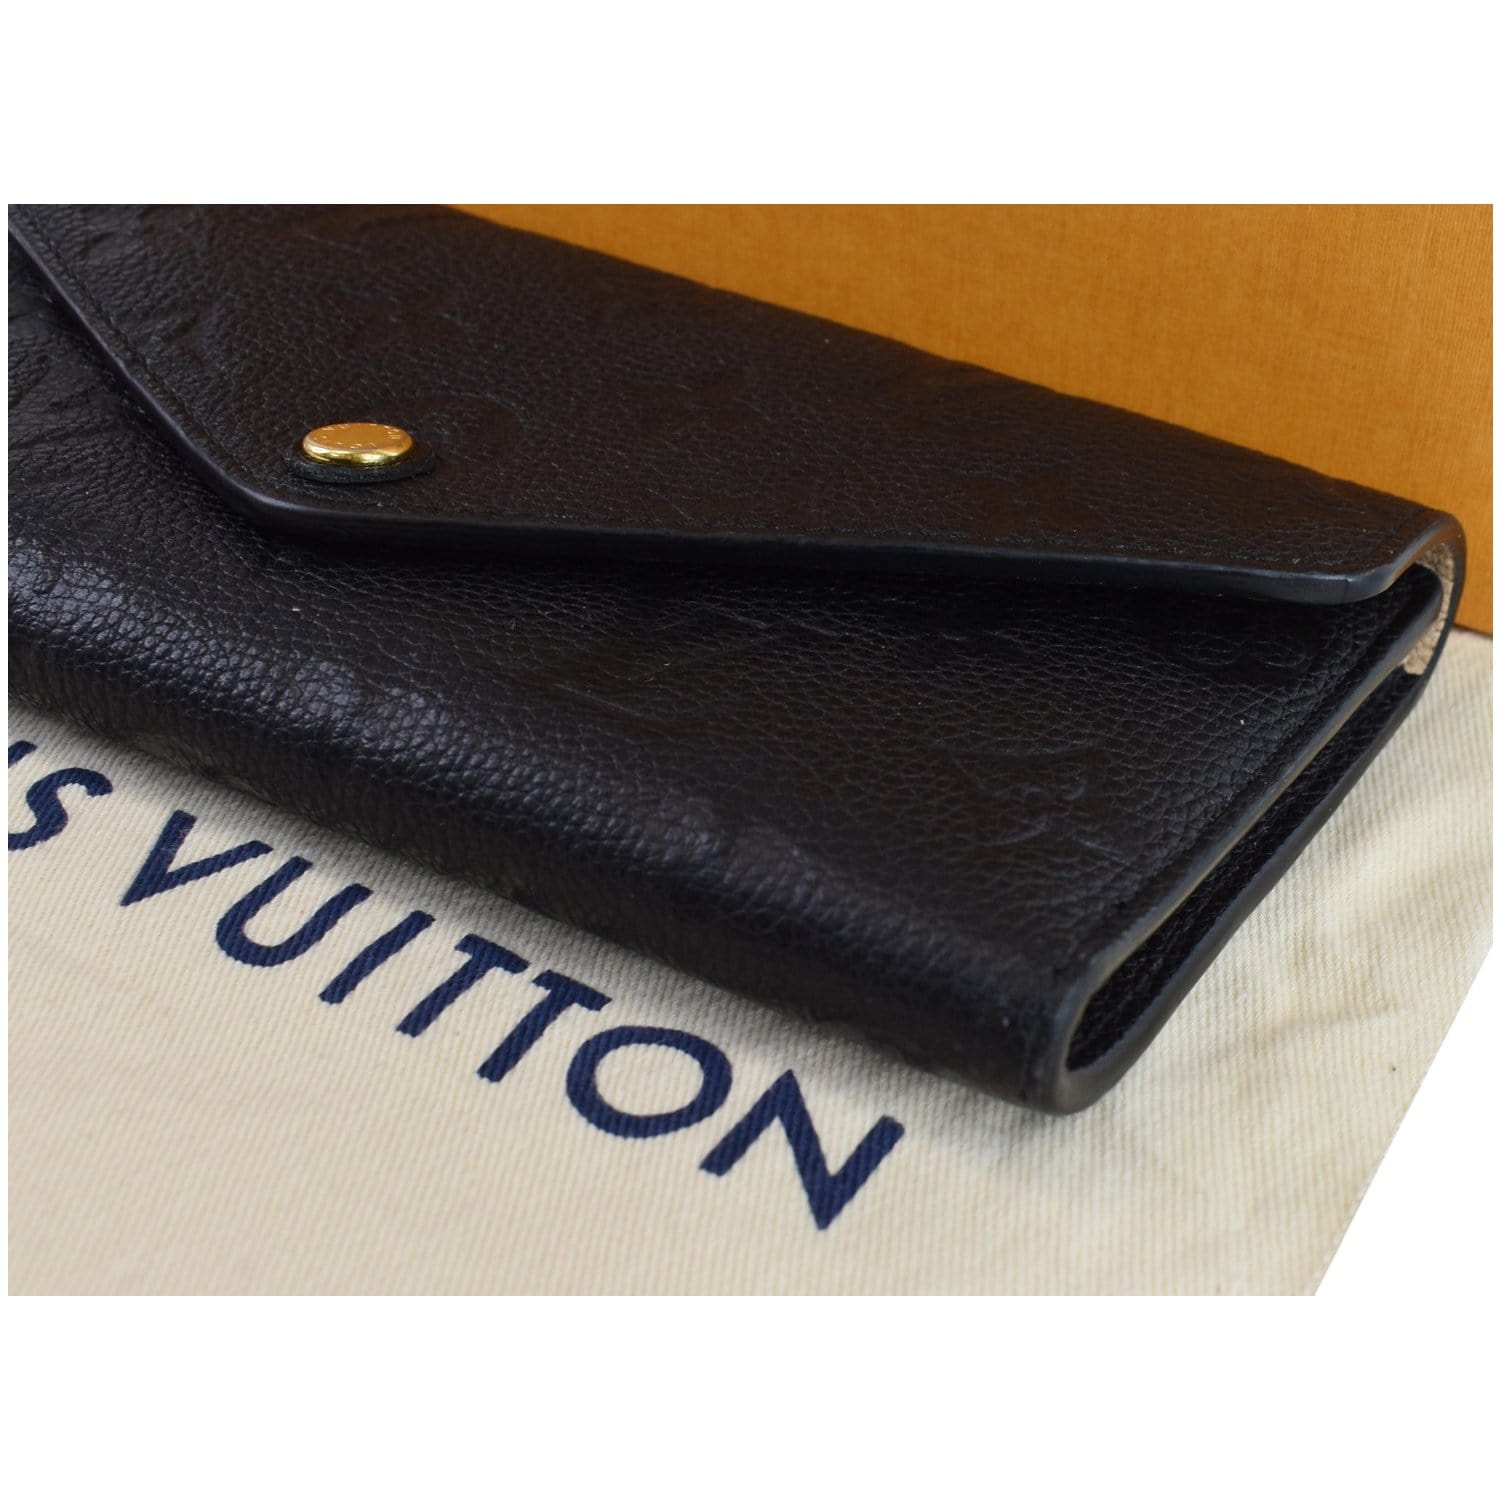 Louis Vuitton Josephine Empreinte Leather Wallet Black